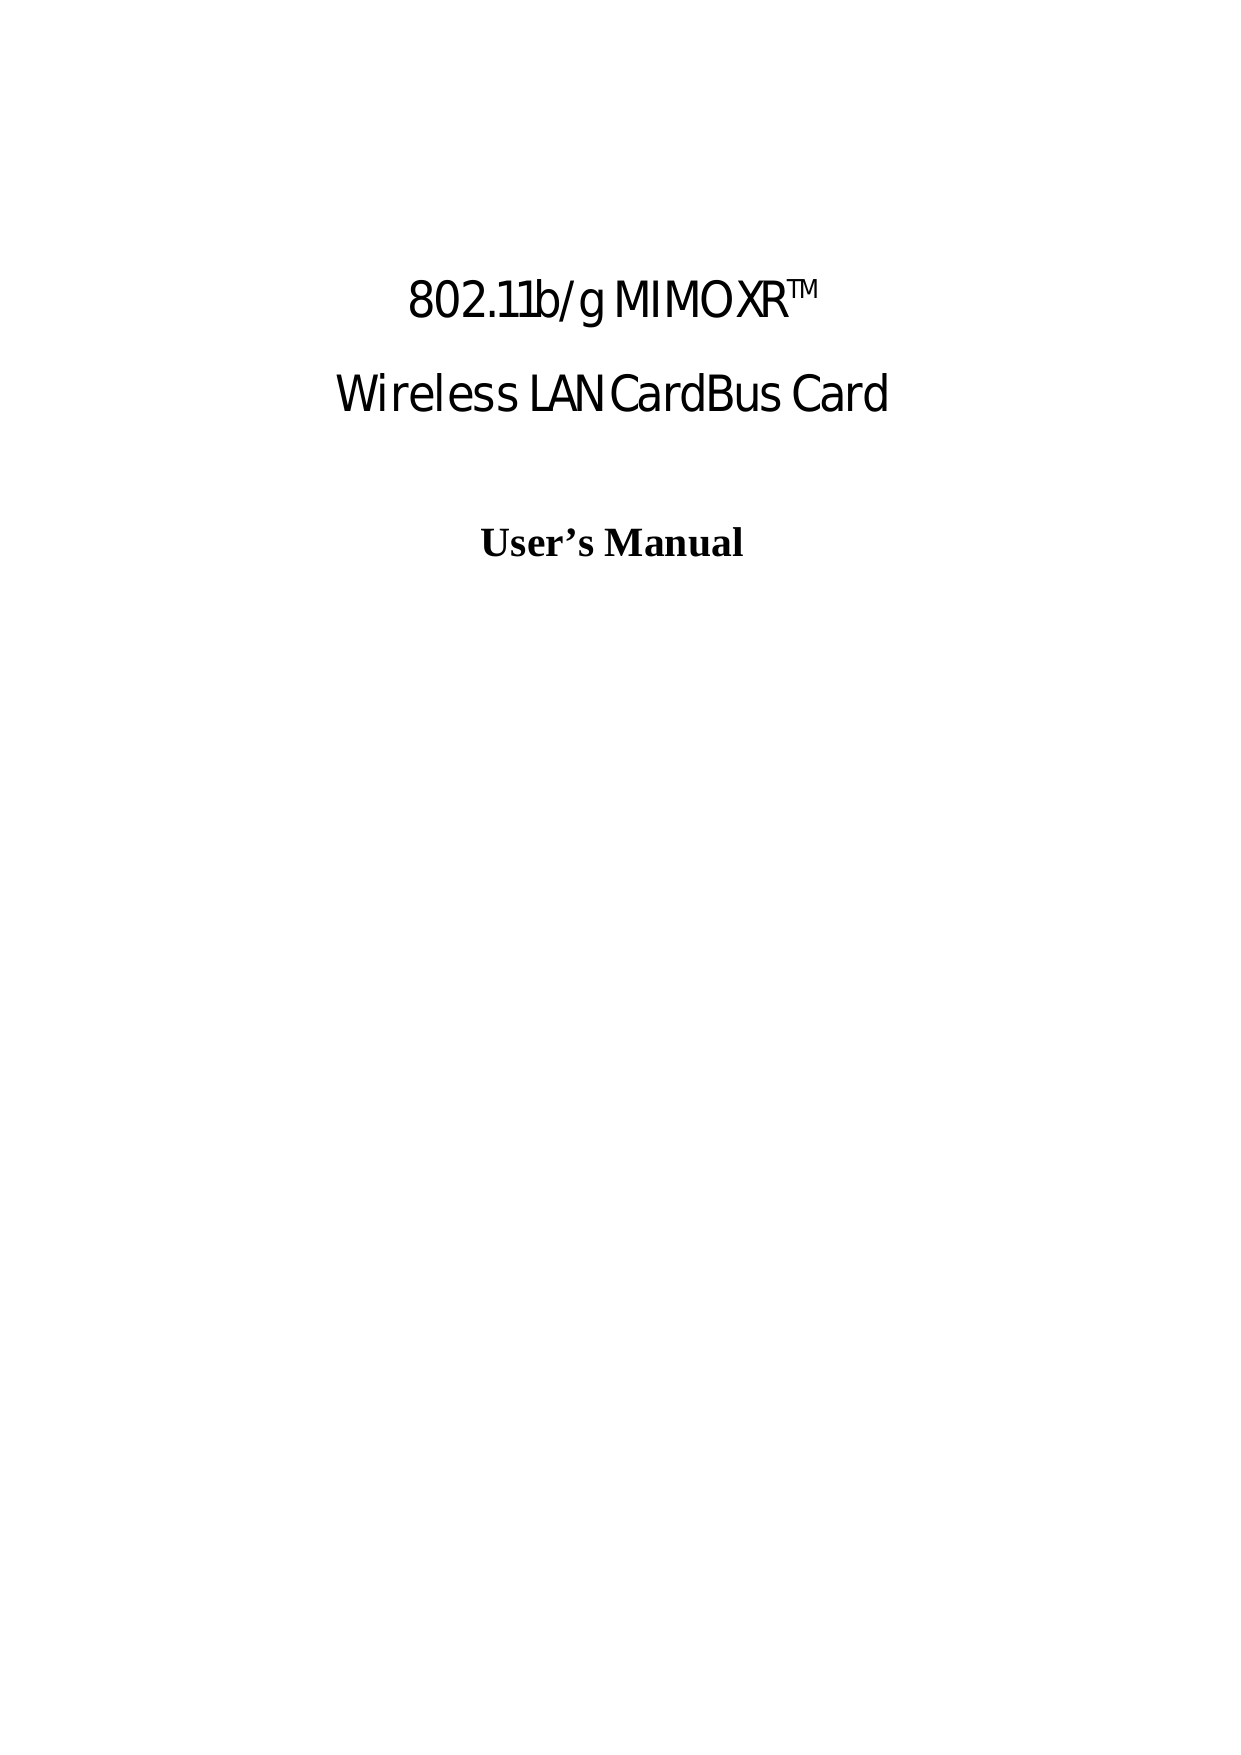     802.11b/g MIMO XRTM Wireless LAN CardBus Card  User’s Manual 